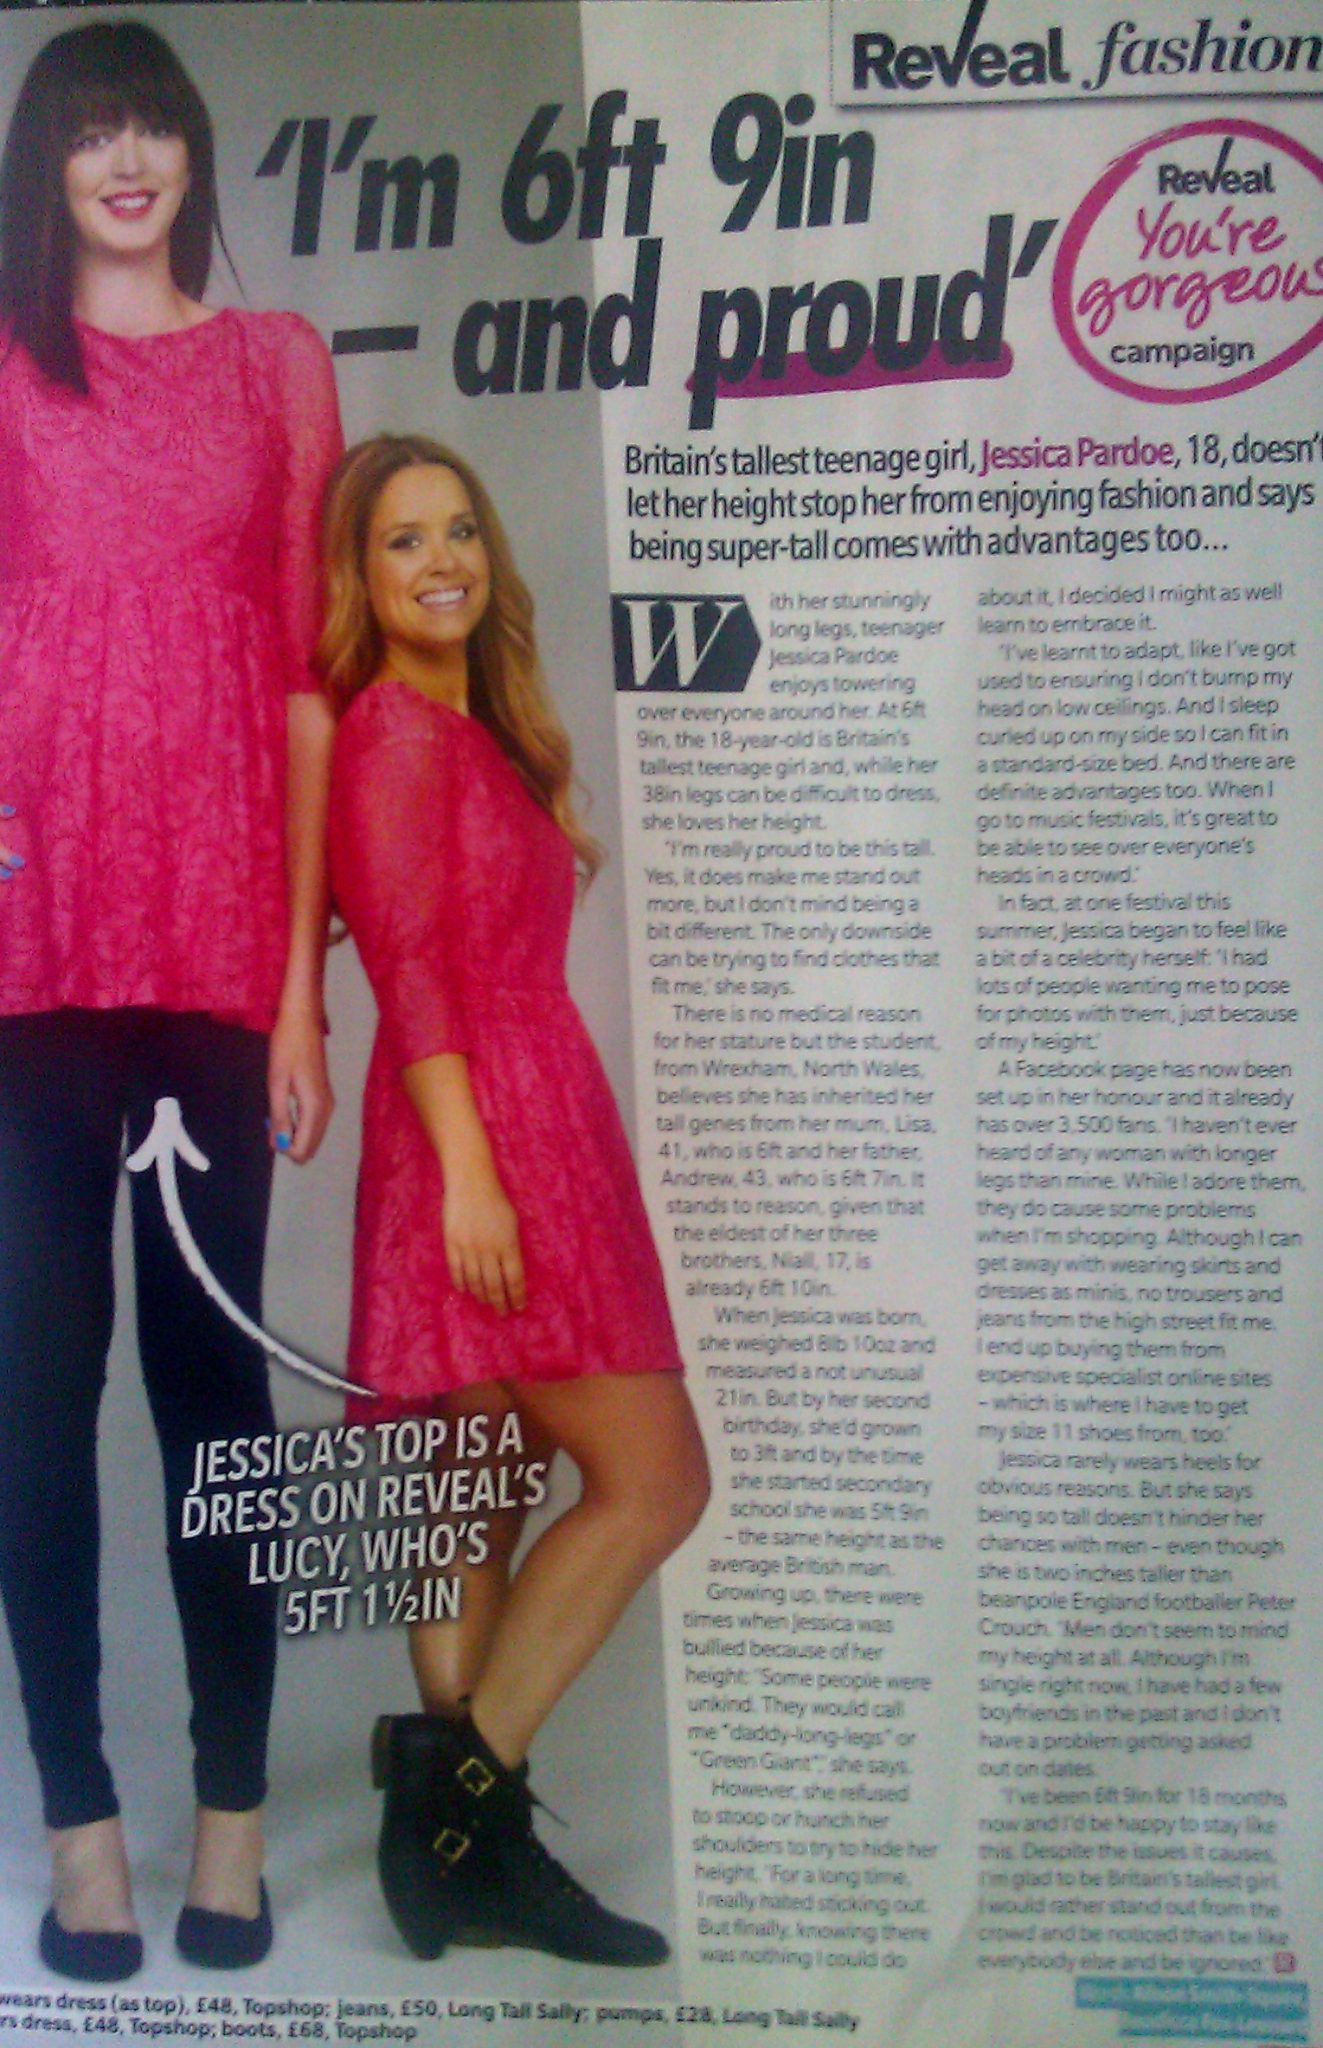 Stunning 6ft 9" Jessica Pardoe in Reveal magazine...